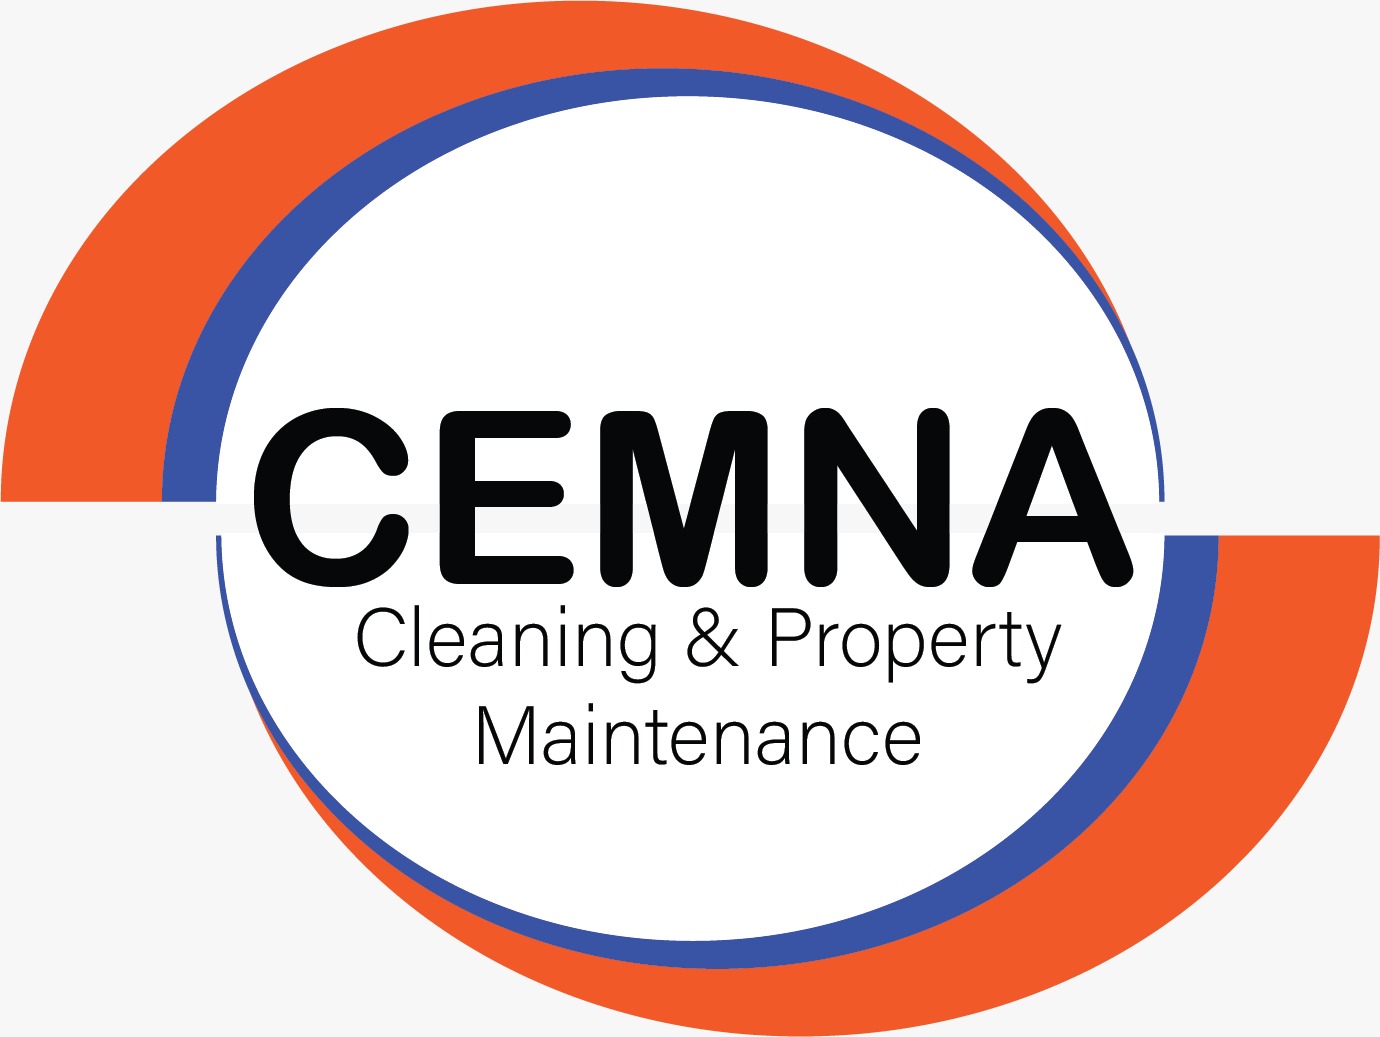 CEMNA Services Ltd